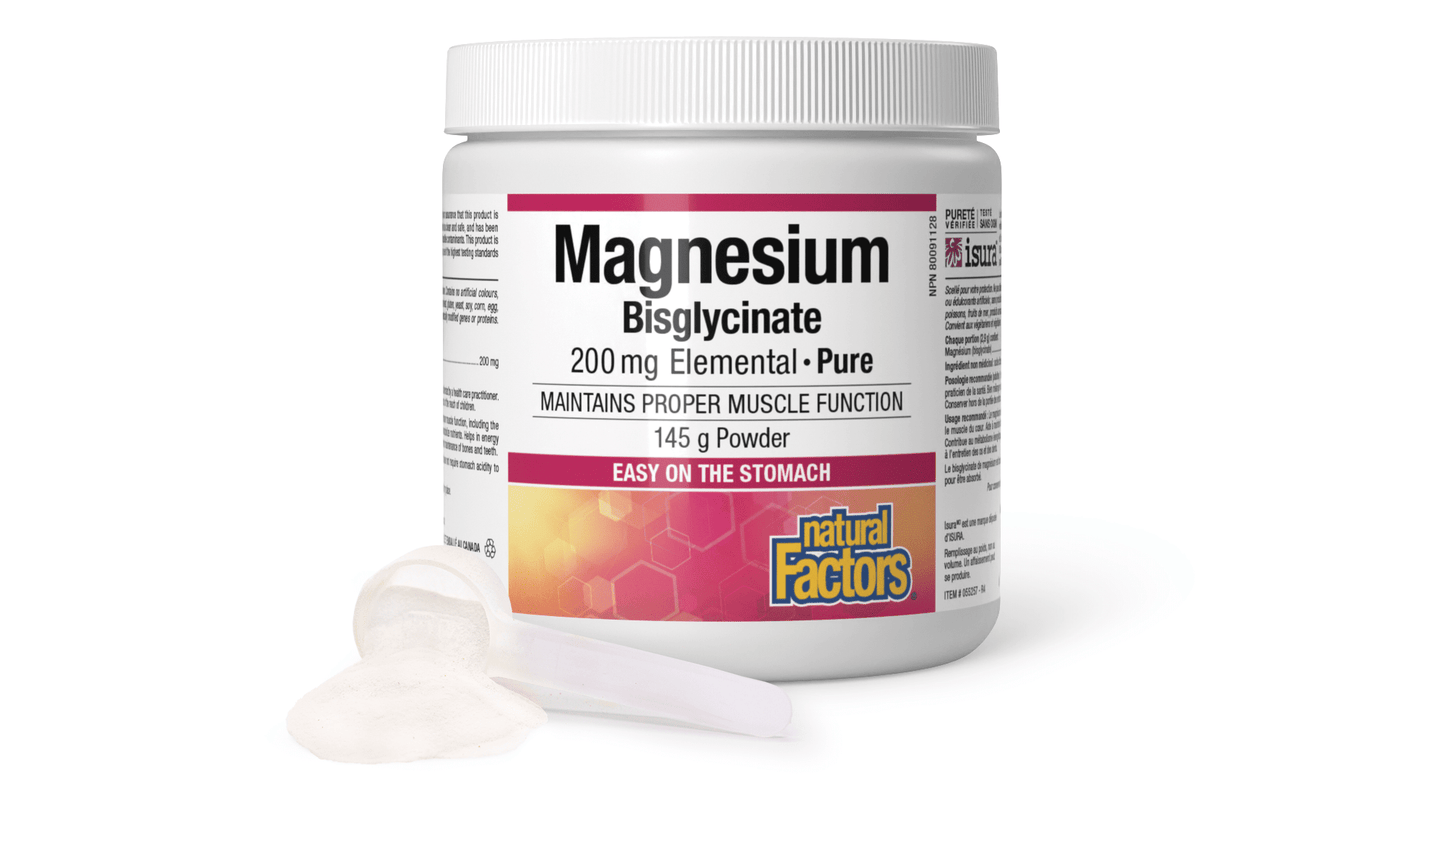 Magnesium Bisglycinate Pure 200 mg, Natural Factors|v|image|1667